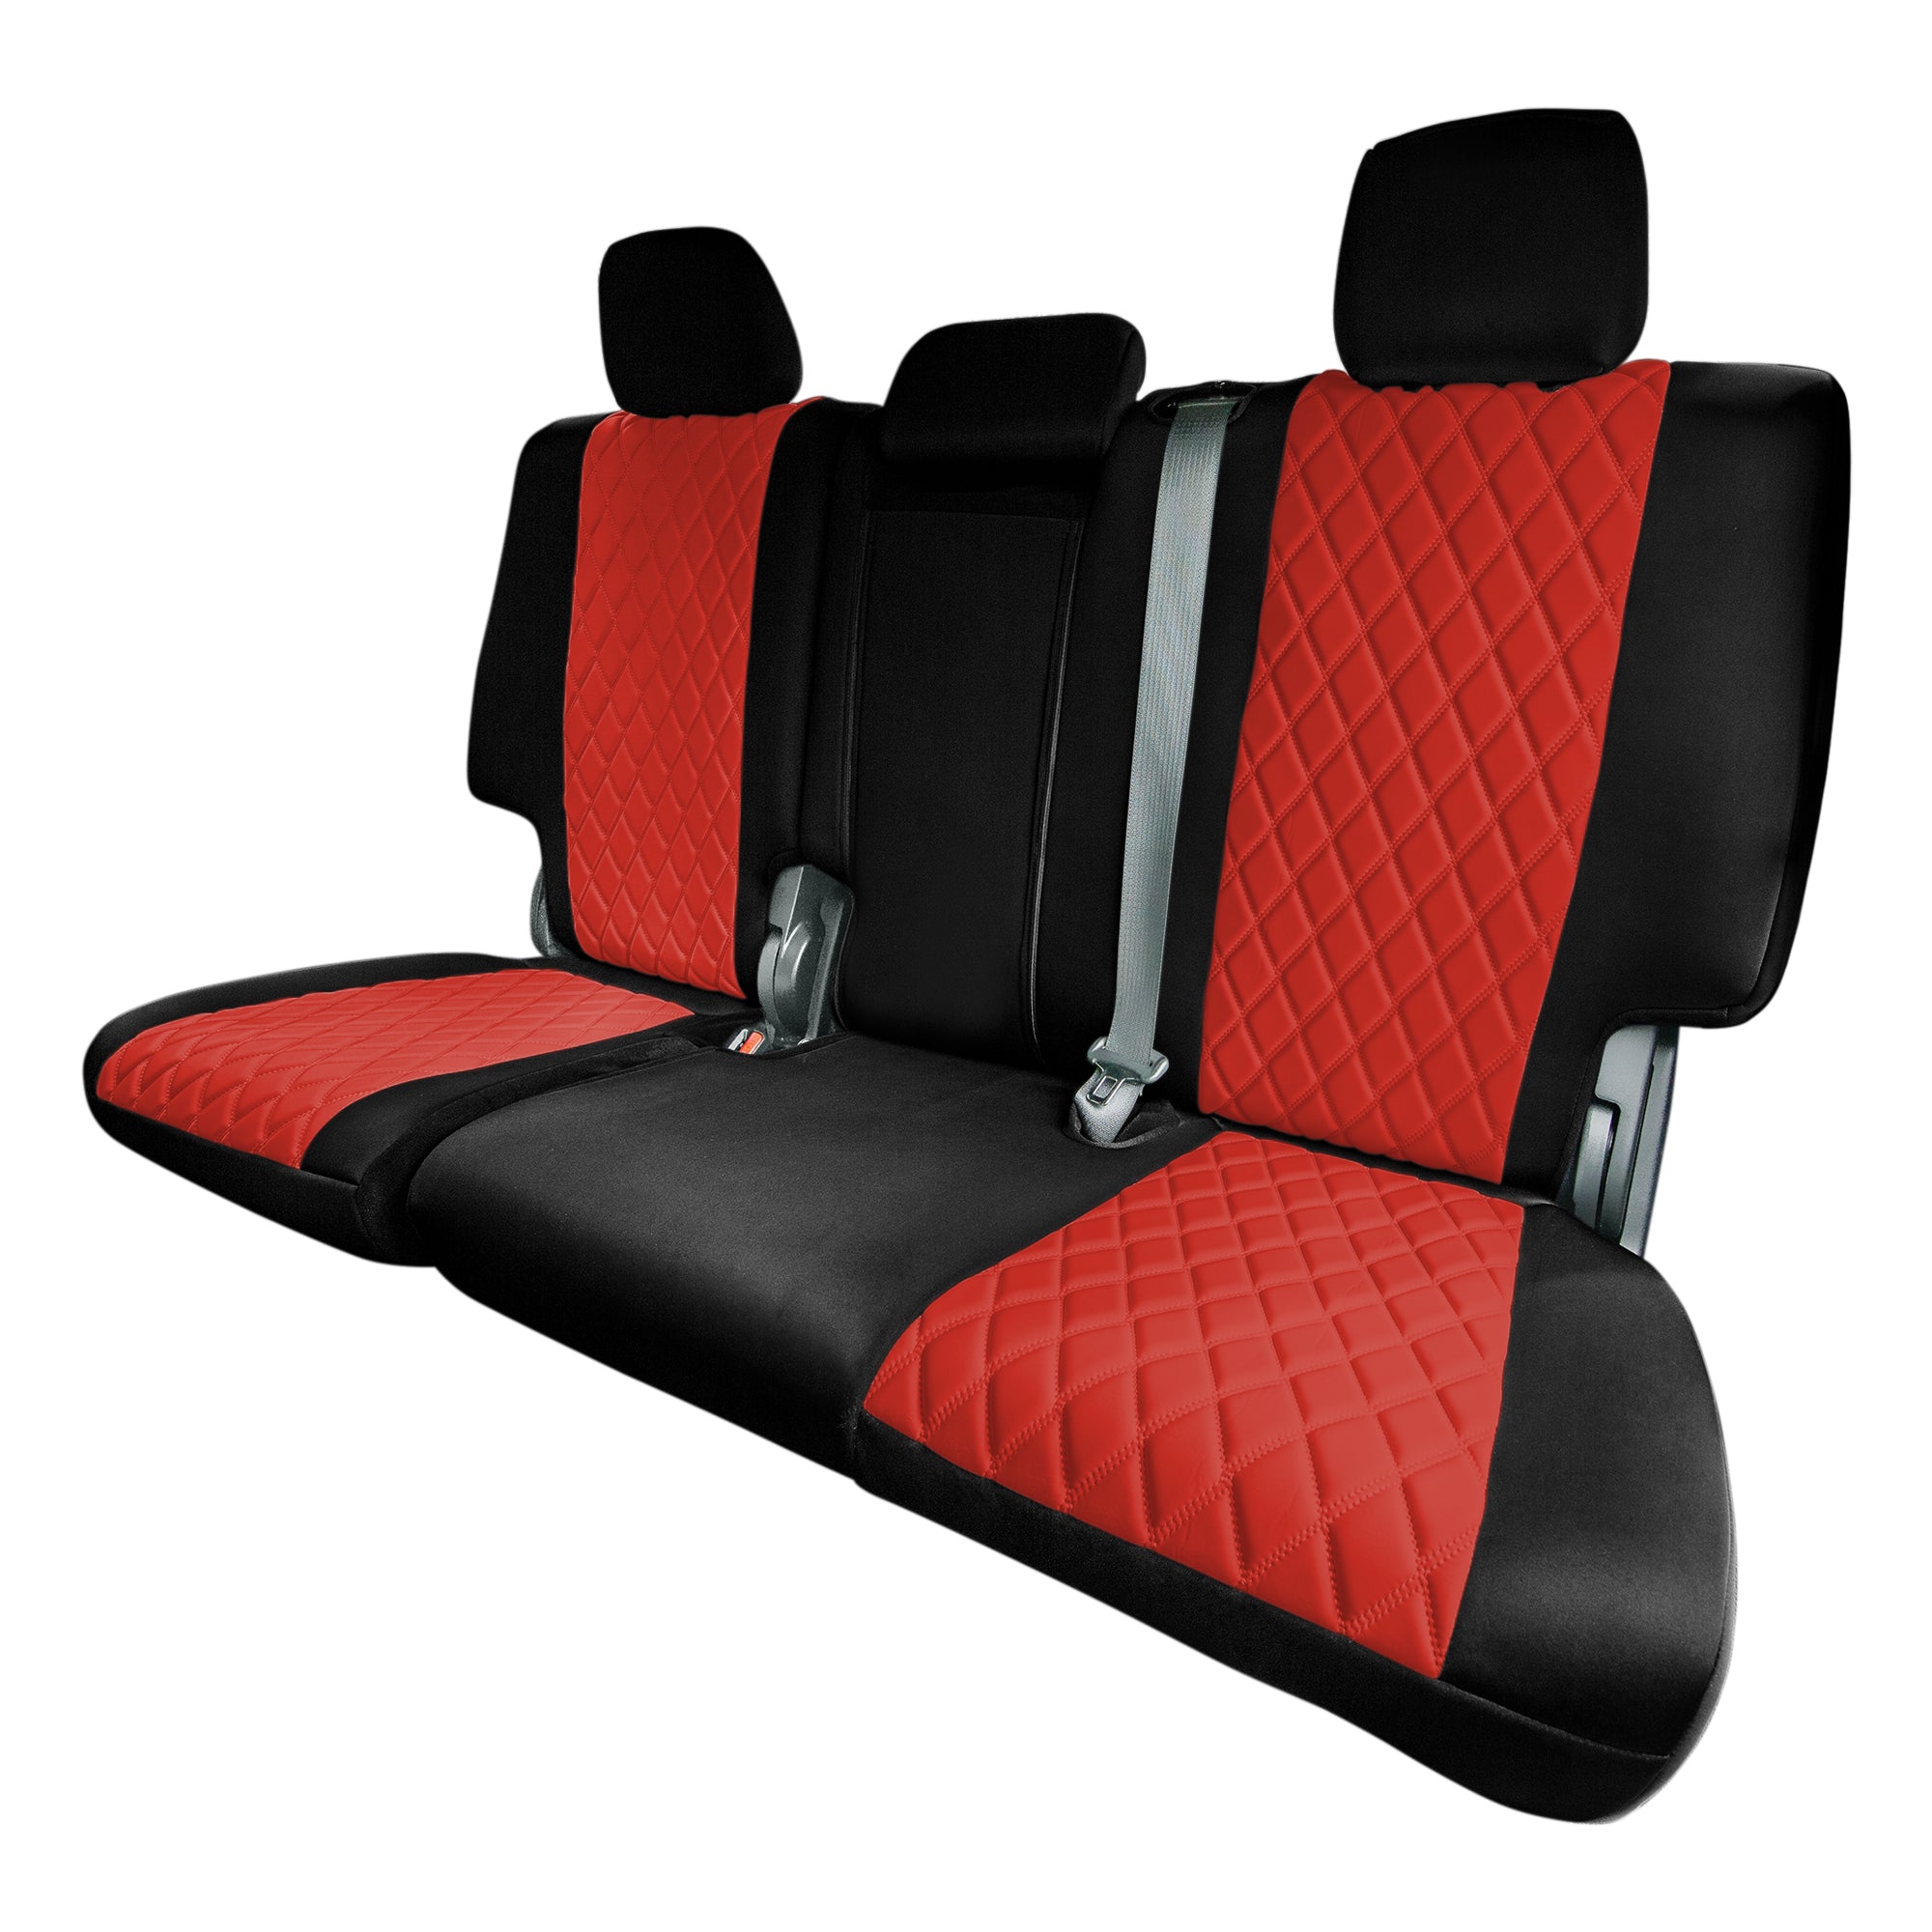 Jeep Grand Cherokee 2011 -2021 - Rear Set Seat Covers - Red Ultraflex Neoprene